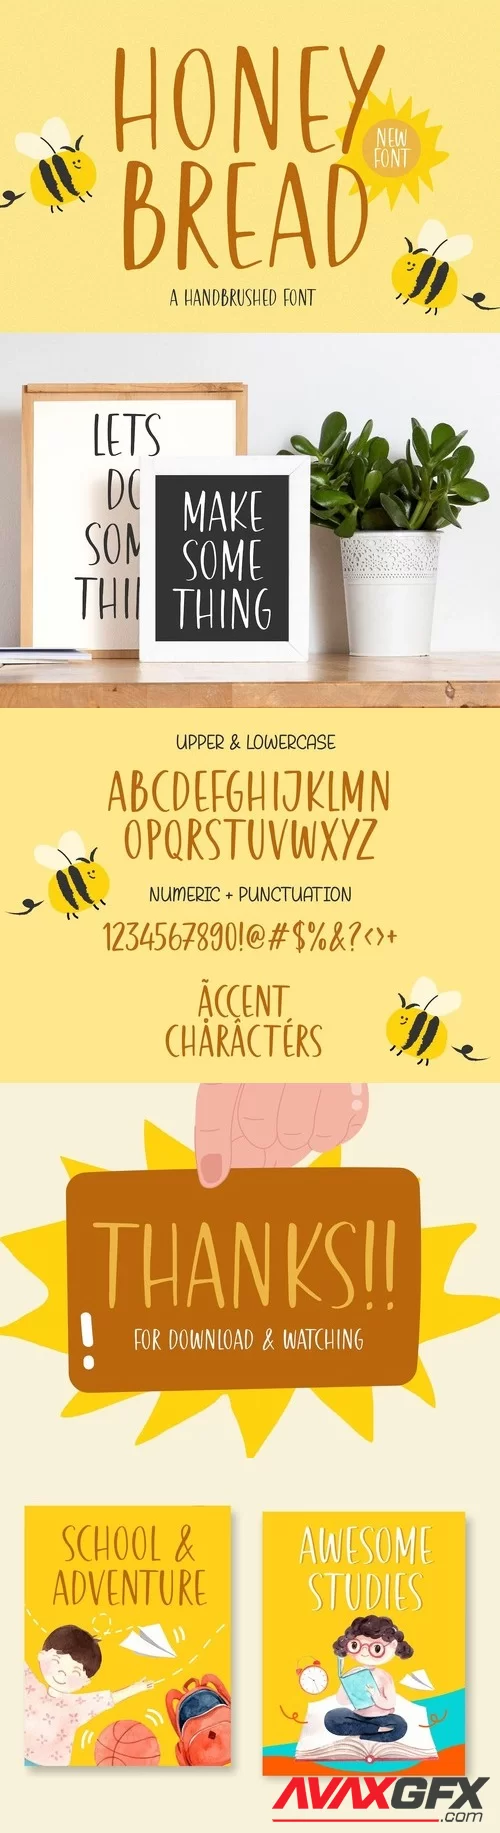 Honey Bread Handwriting Font